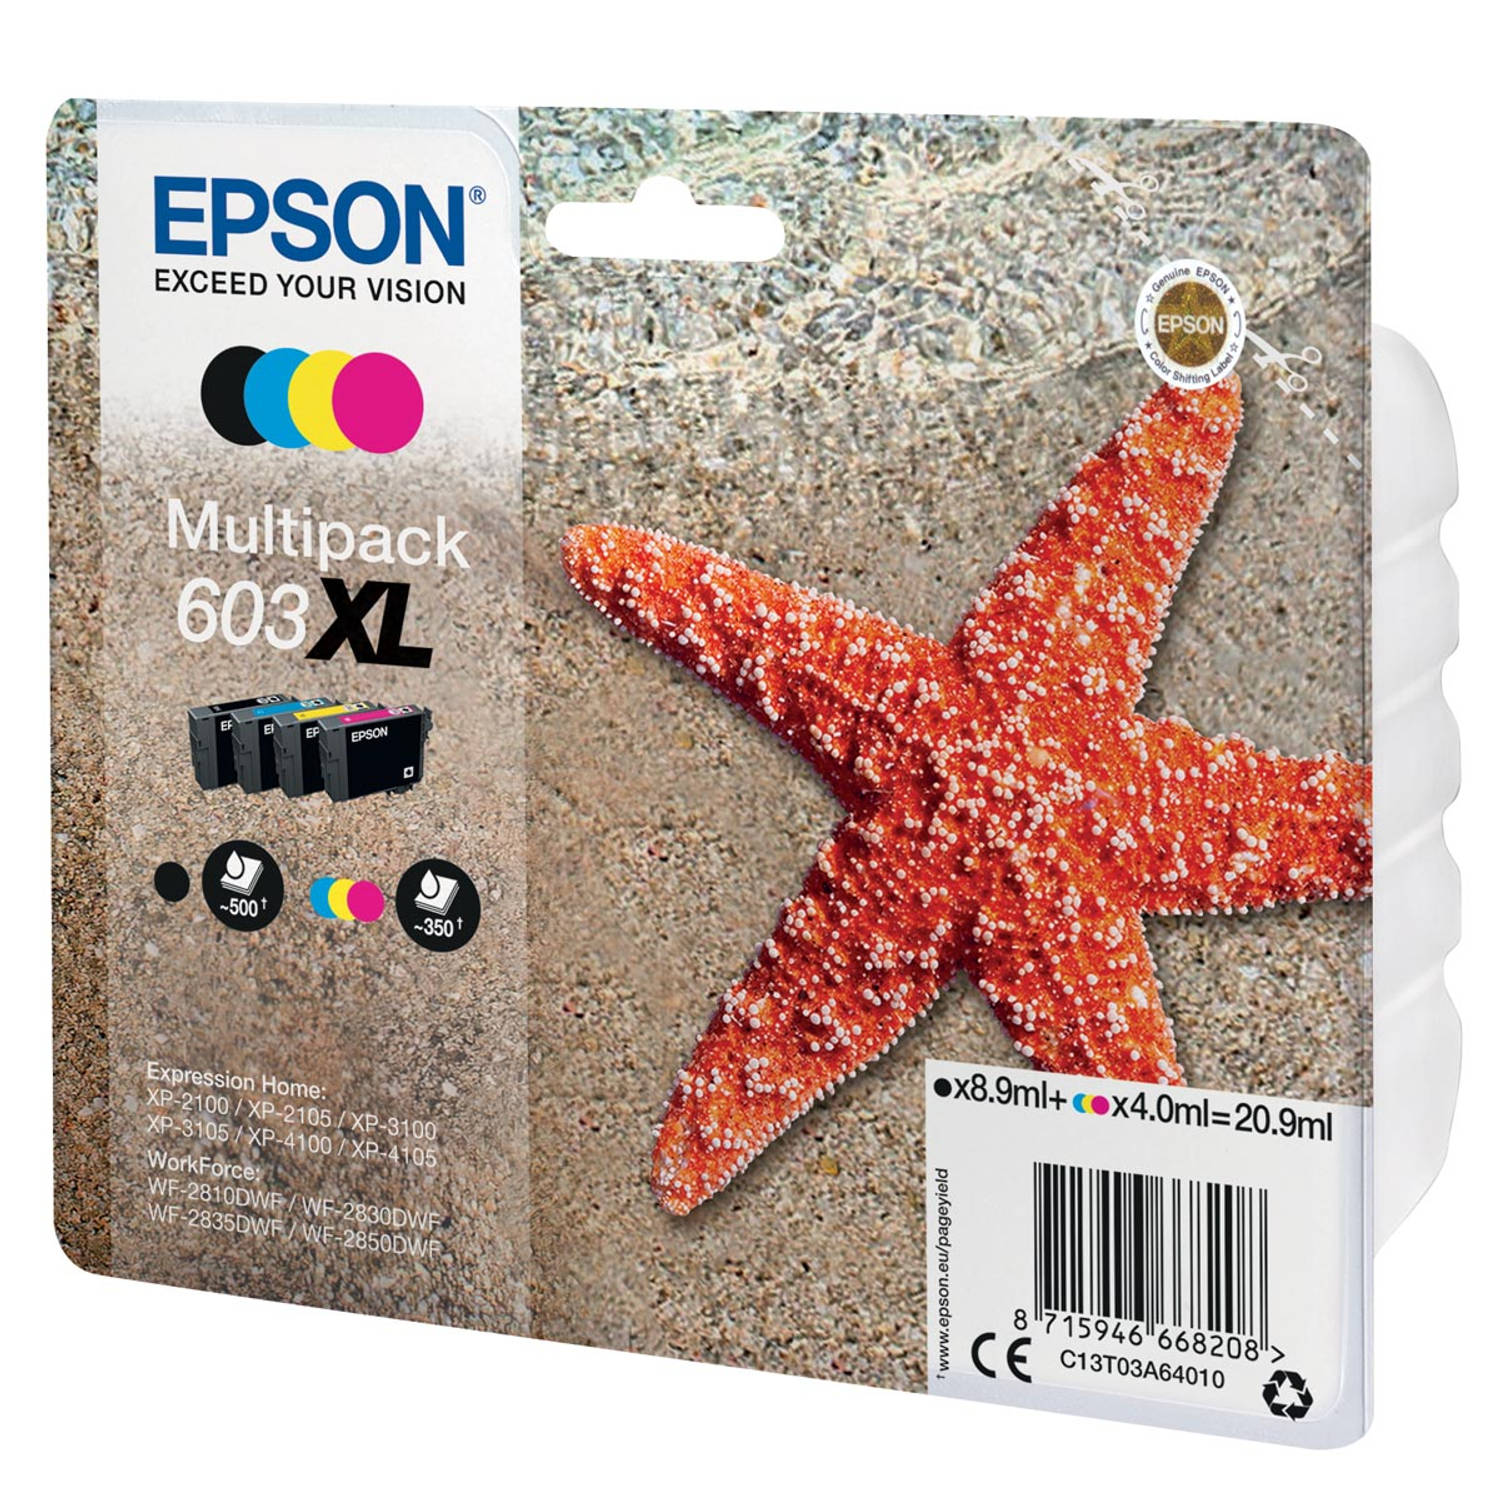 Epson inktcartridge 603 XL, 20,9 ml, OEM C13T03A64010, 4 kleuren 8 stuks